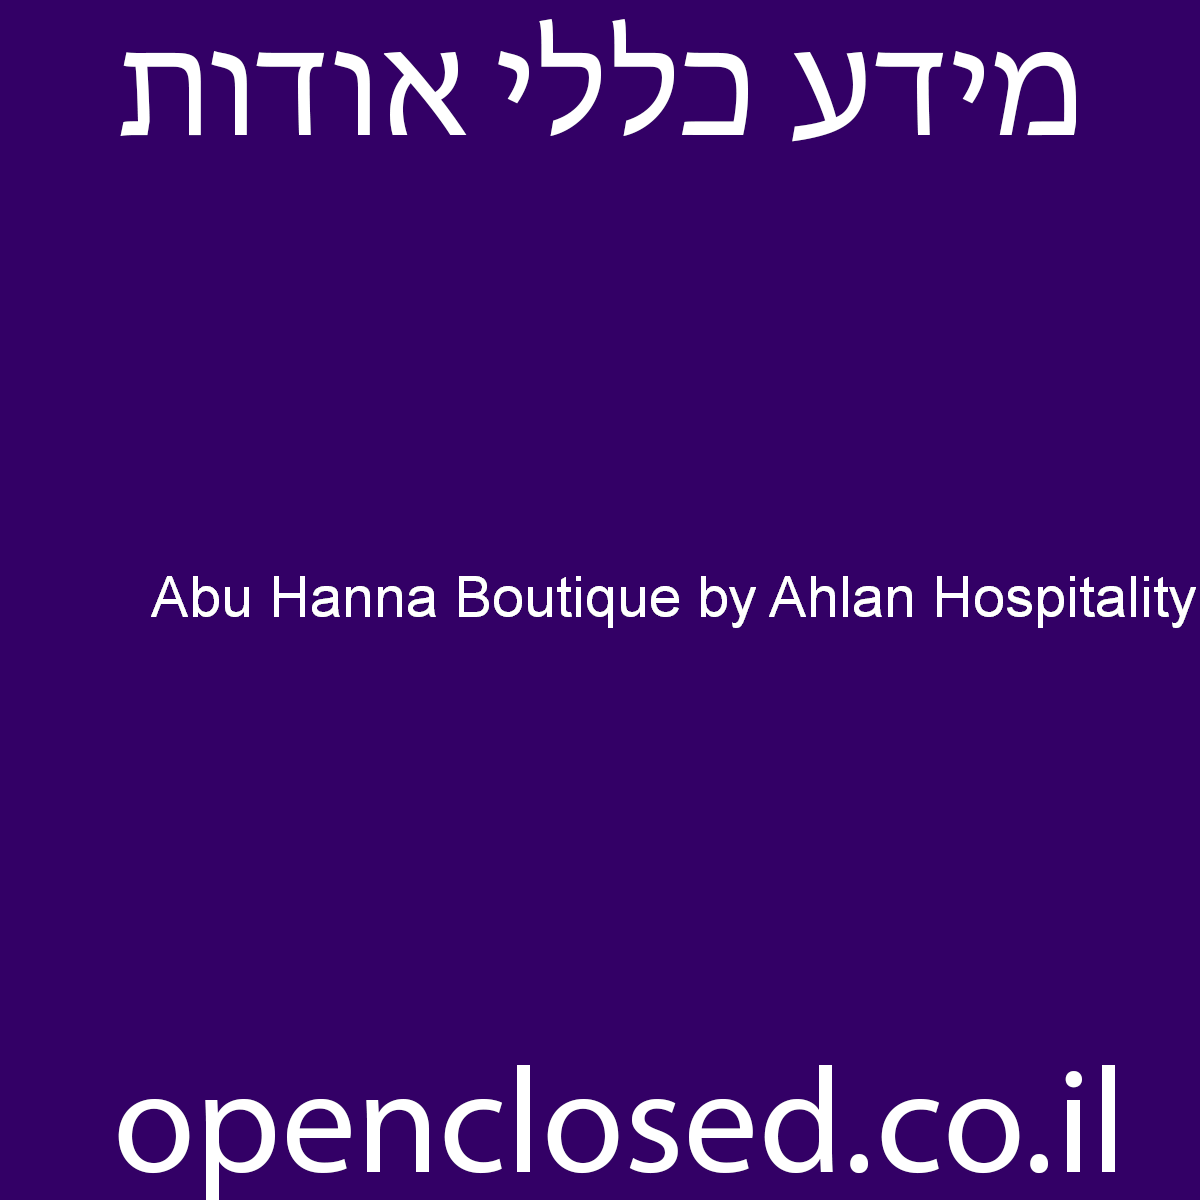 Abu Hanna Boutique by Ahlan Hospitality